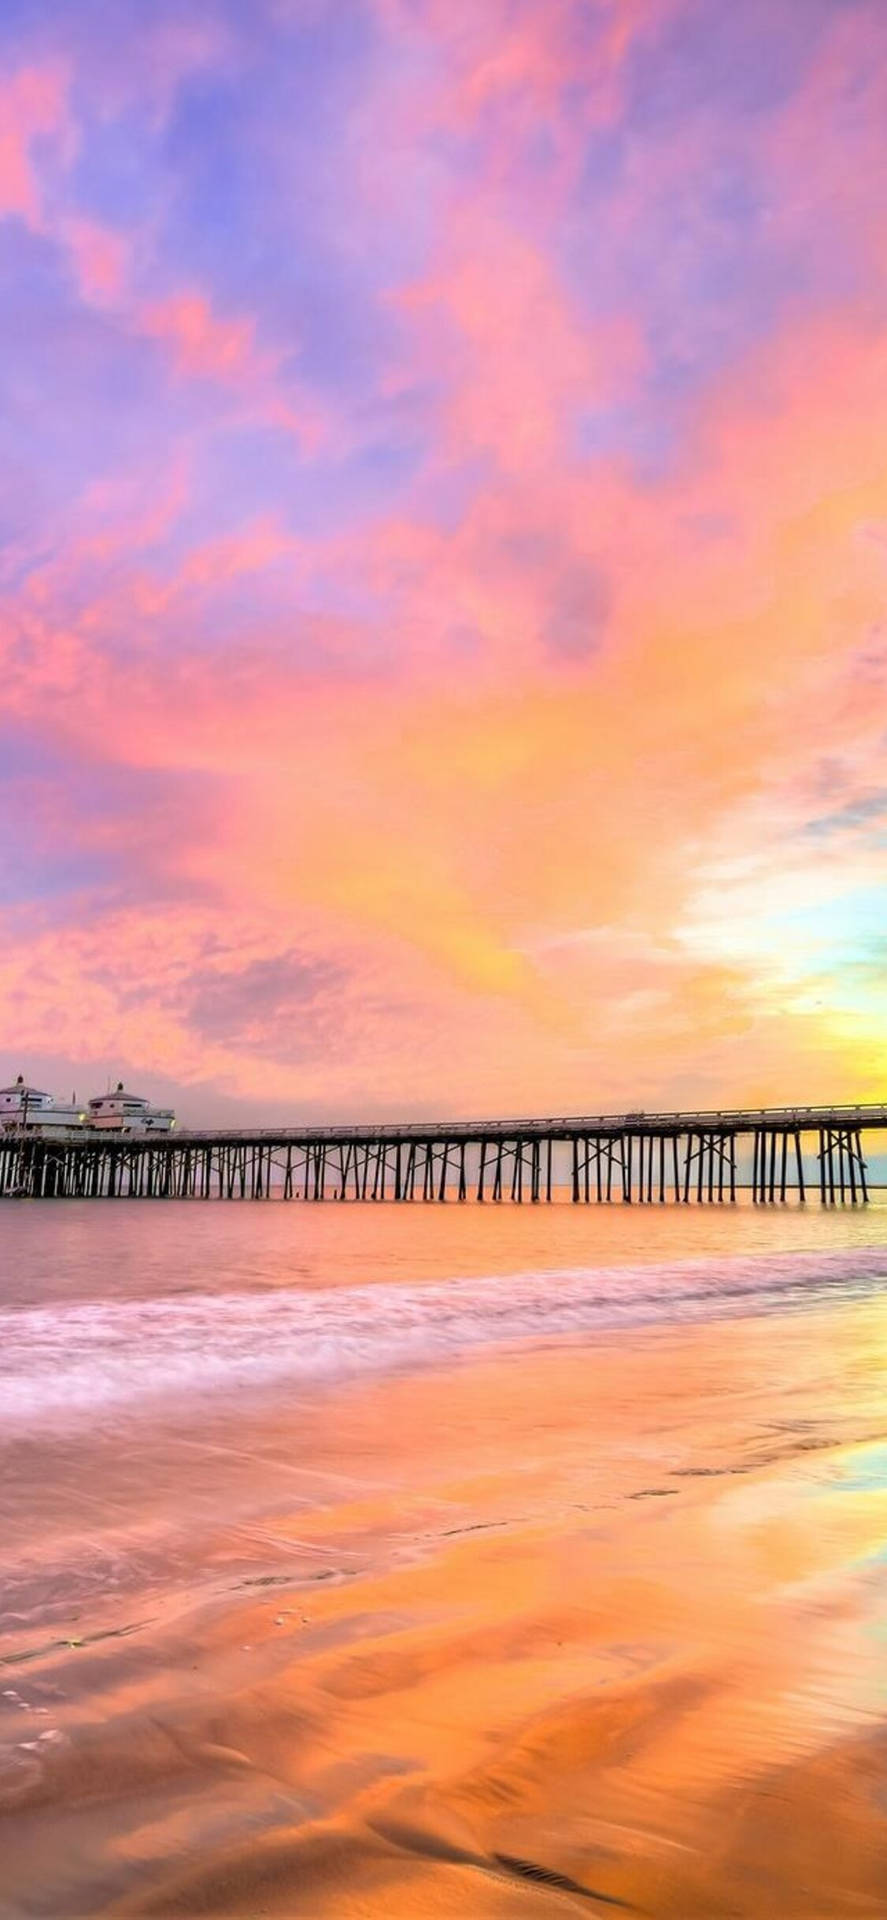 Download Aesthetic Hermosa Beach Pier iPhone California Wallpaper